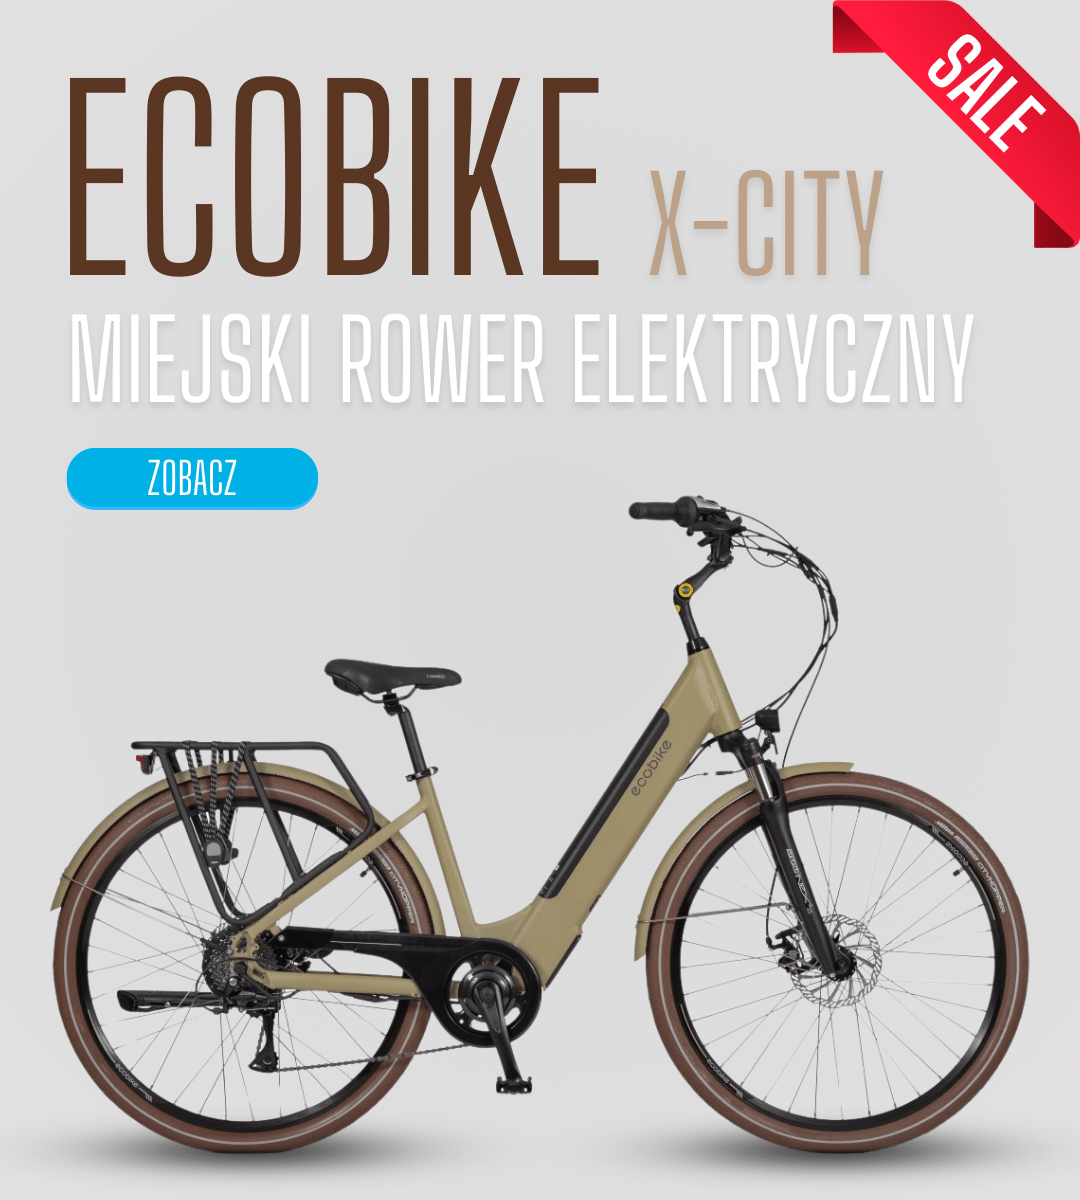 Ecobike X-city